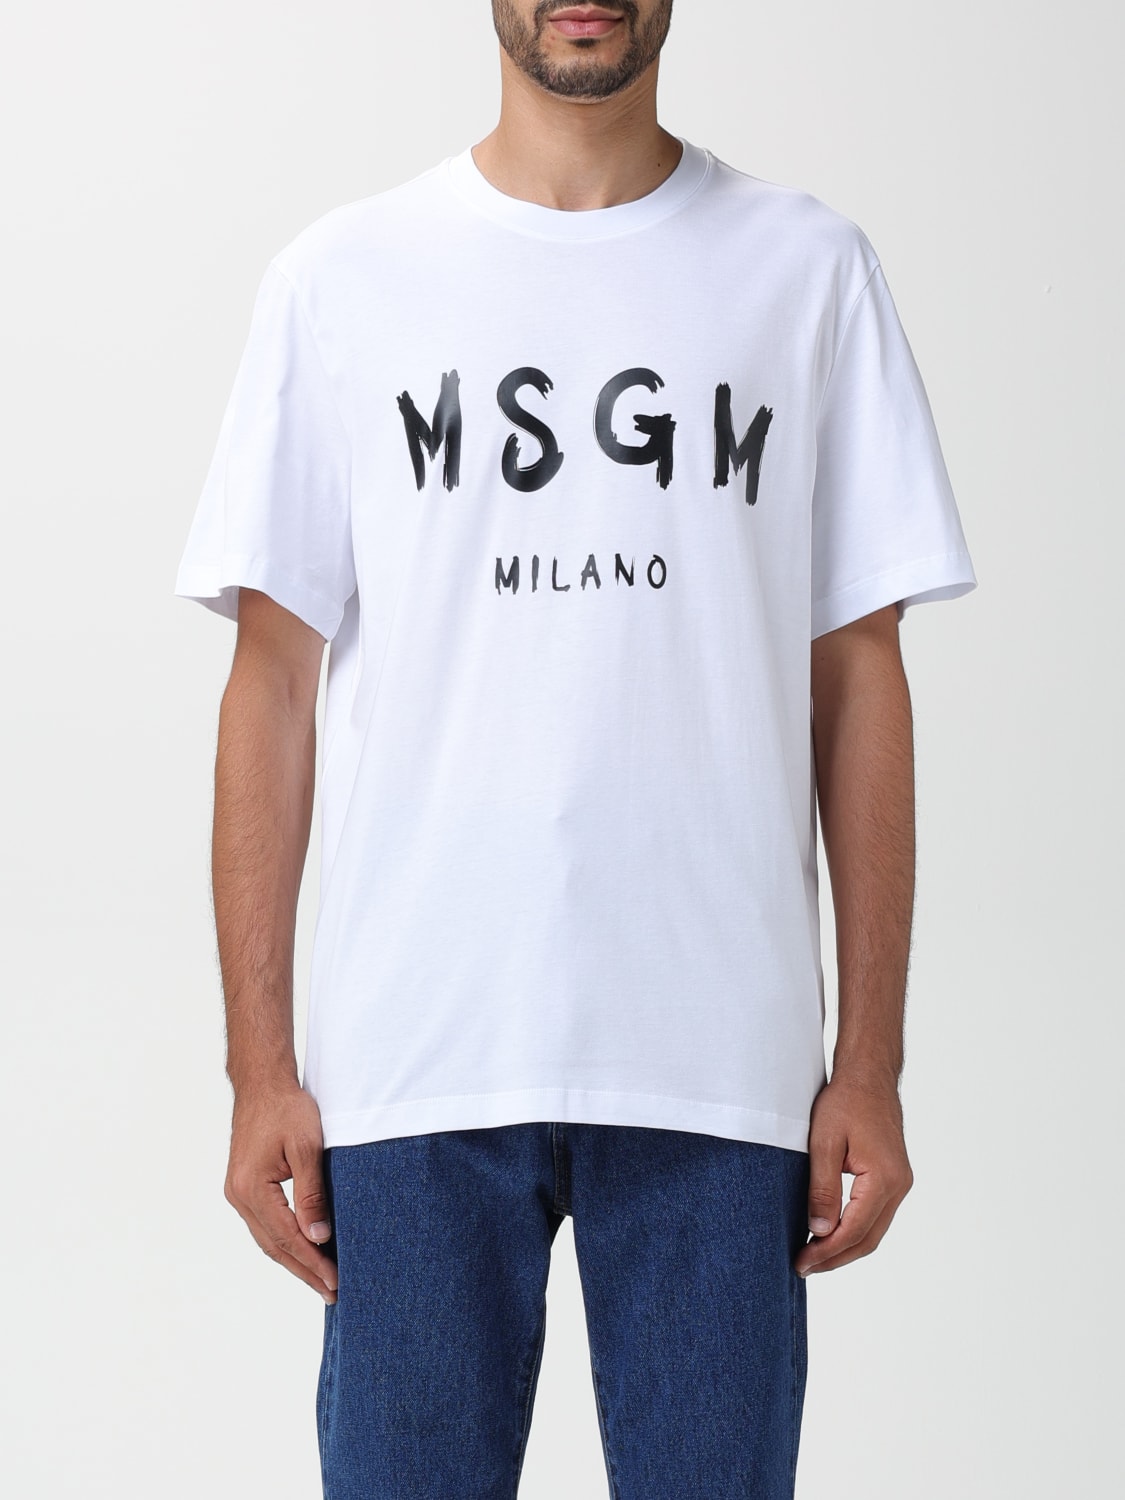 MSGM メンズTシャツ ホワイト-eastgate.mk